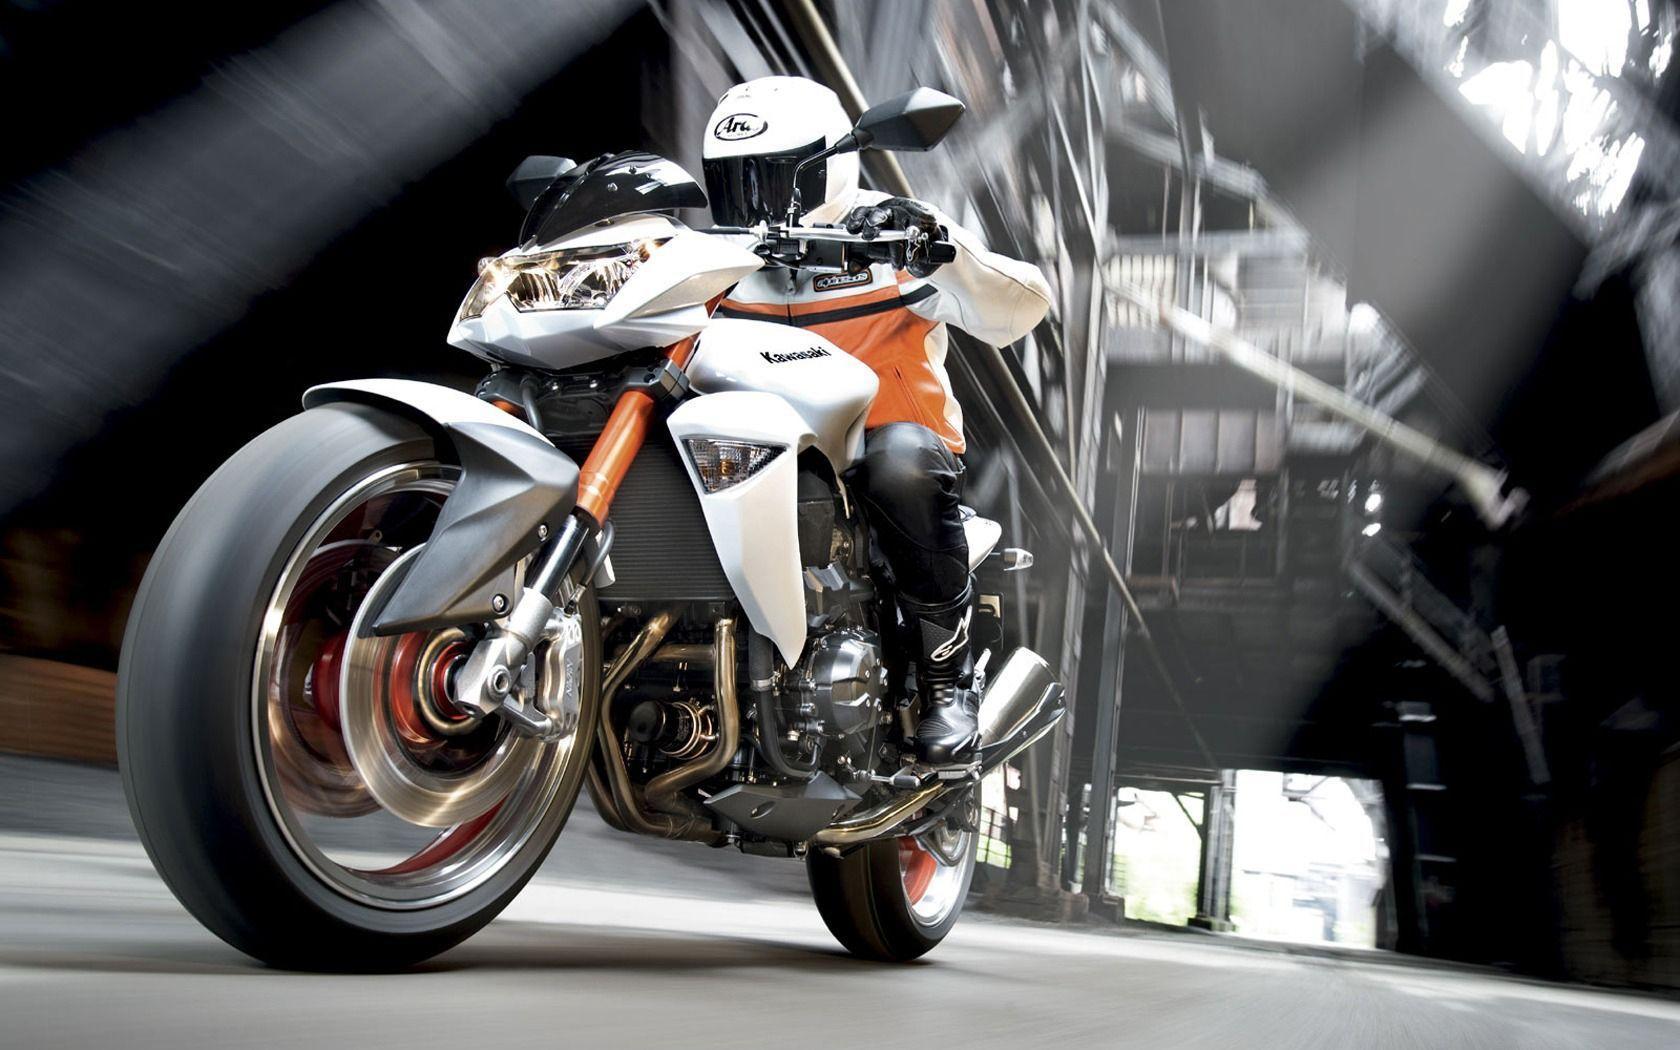 Picture Kawasaki Z1000 Motorcycle HD Widescreen Wallpaper